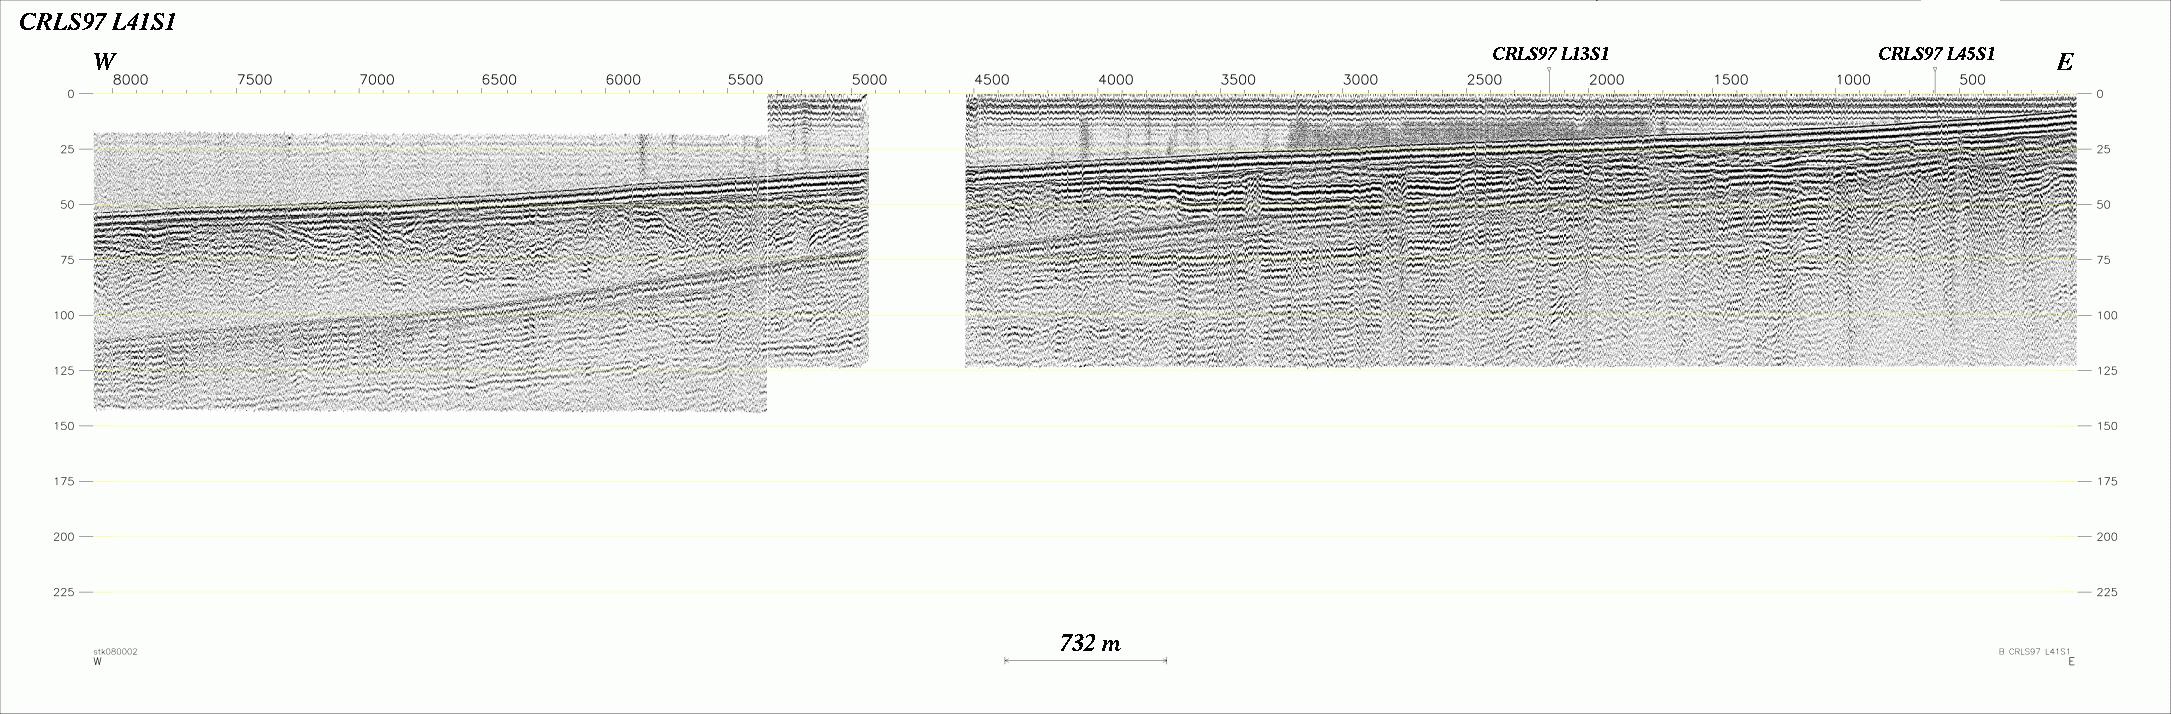 Seismic Reflection Profile Line No.: L41s1 (283275 bytes)